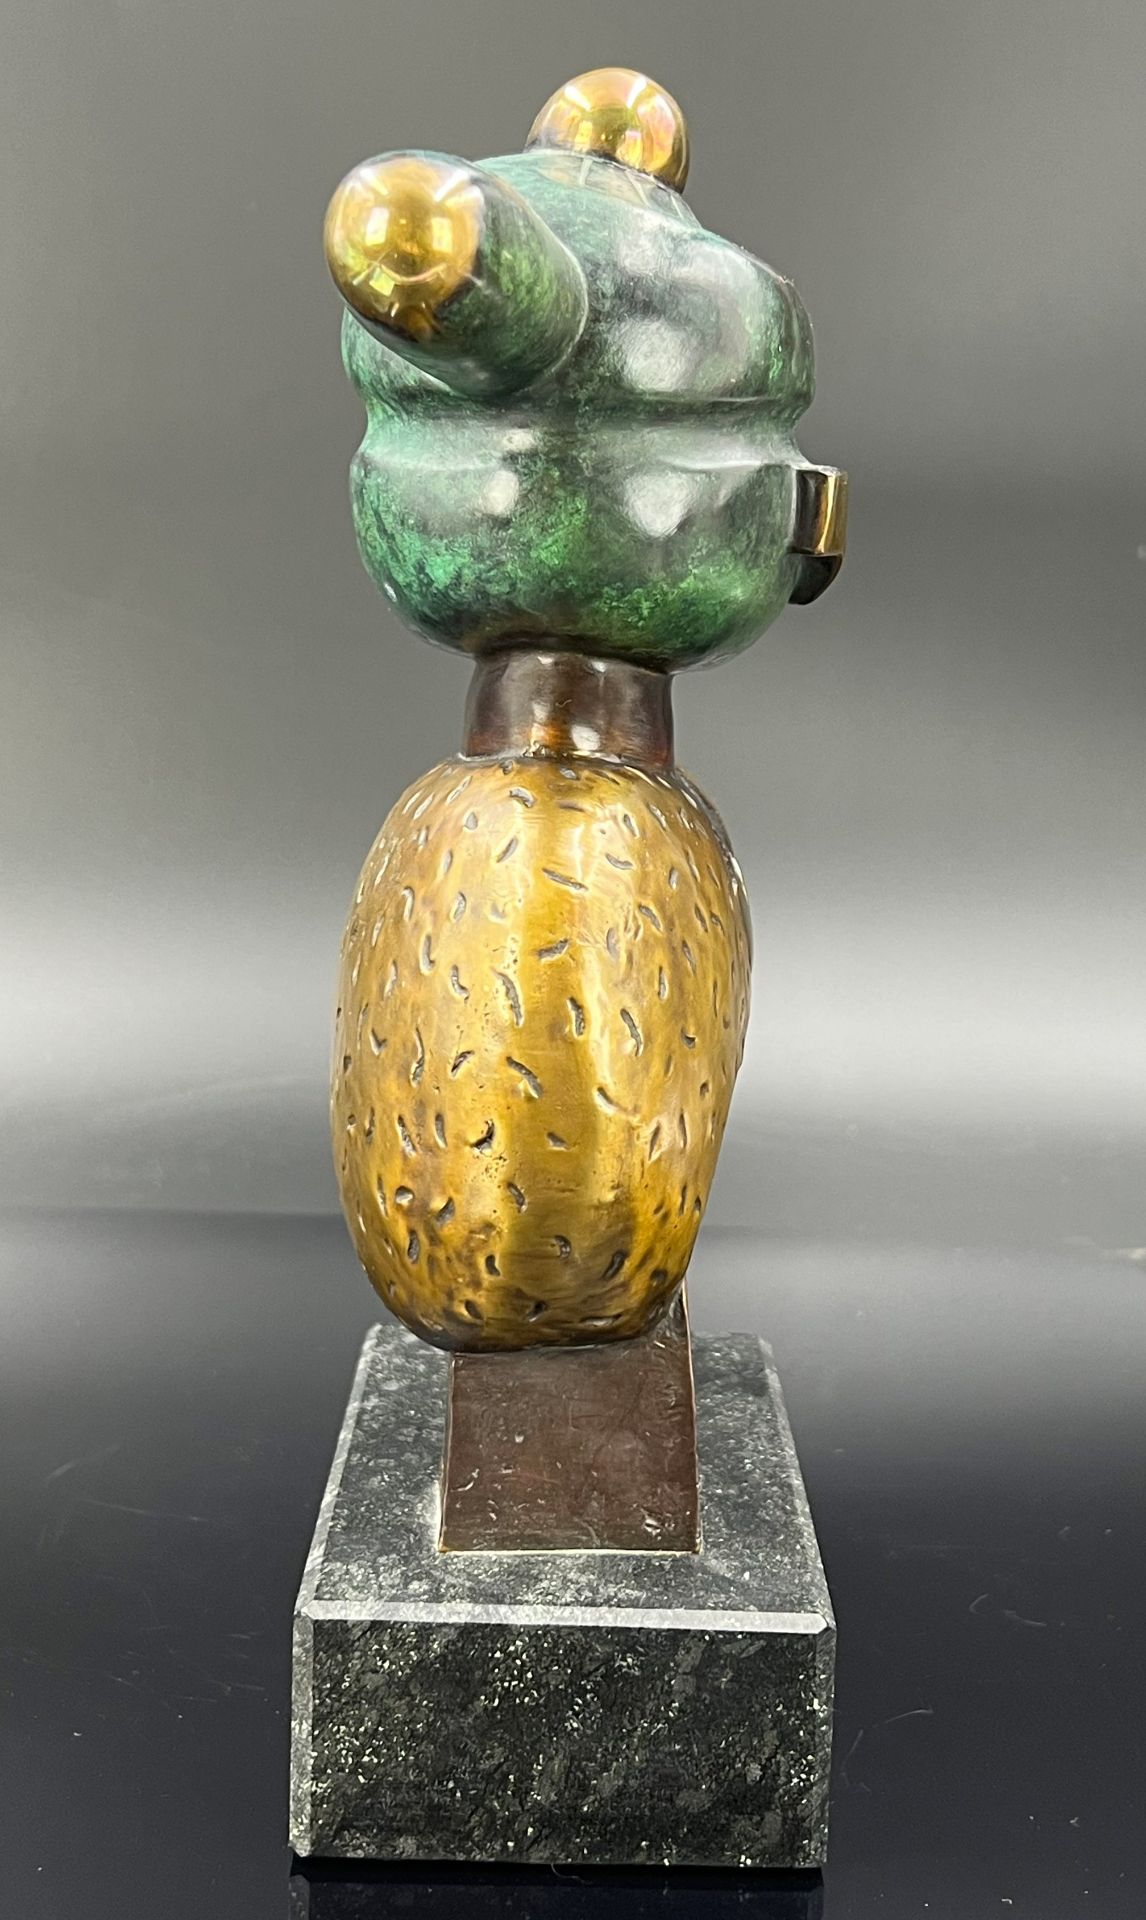 Otmar ALT (1940). Bronze. "King of the bees". 2005. - Image 4 of 8